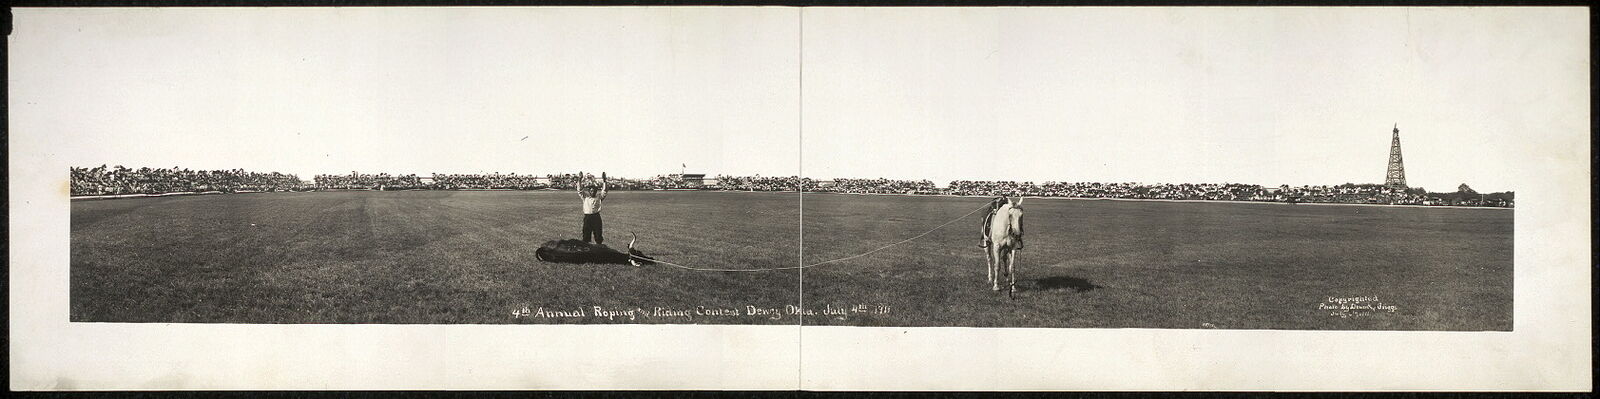 Photo:1911 Panoramic: 4th Annual Riding,Roping Contest,Dewey,Oklahoma